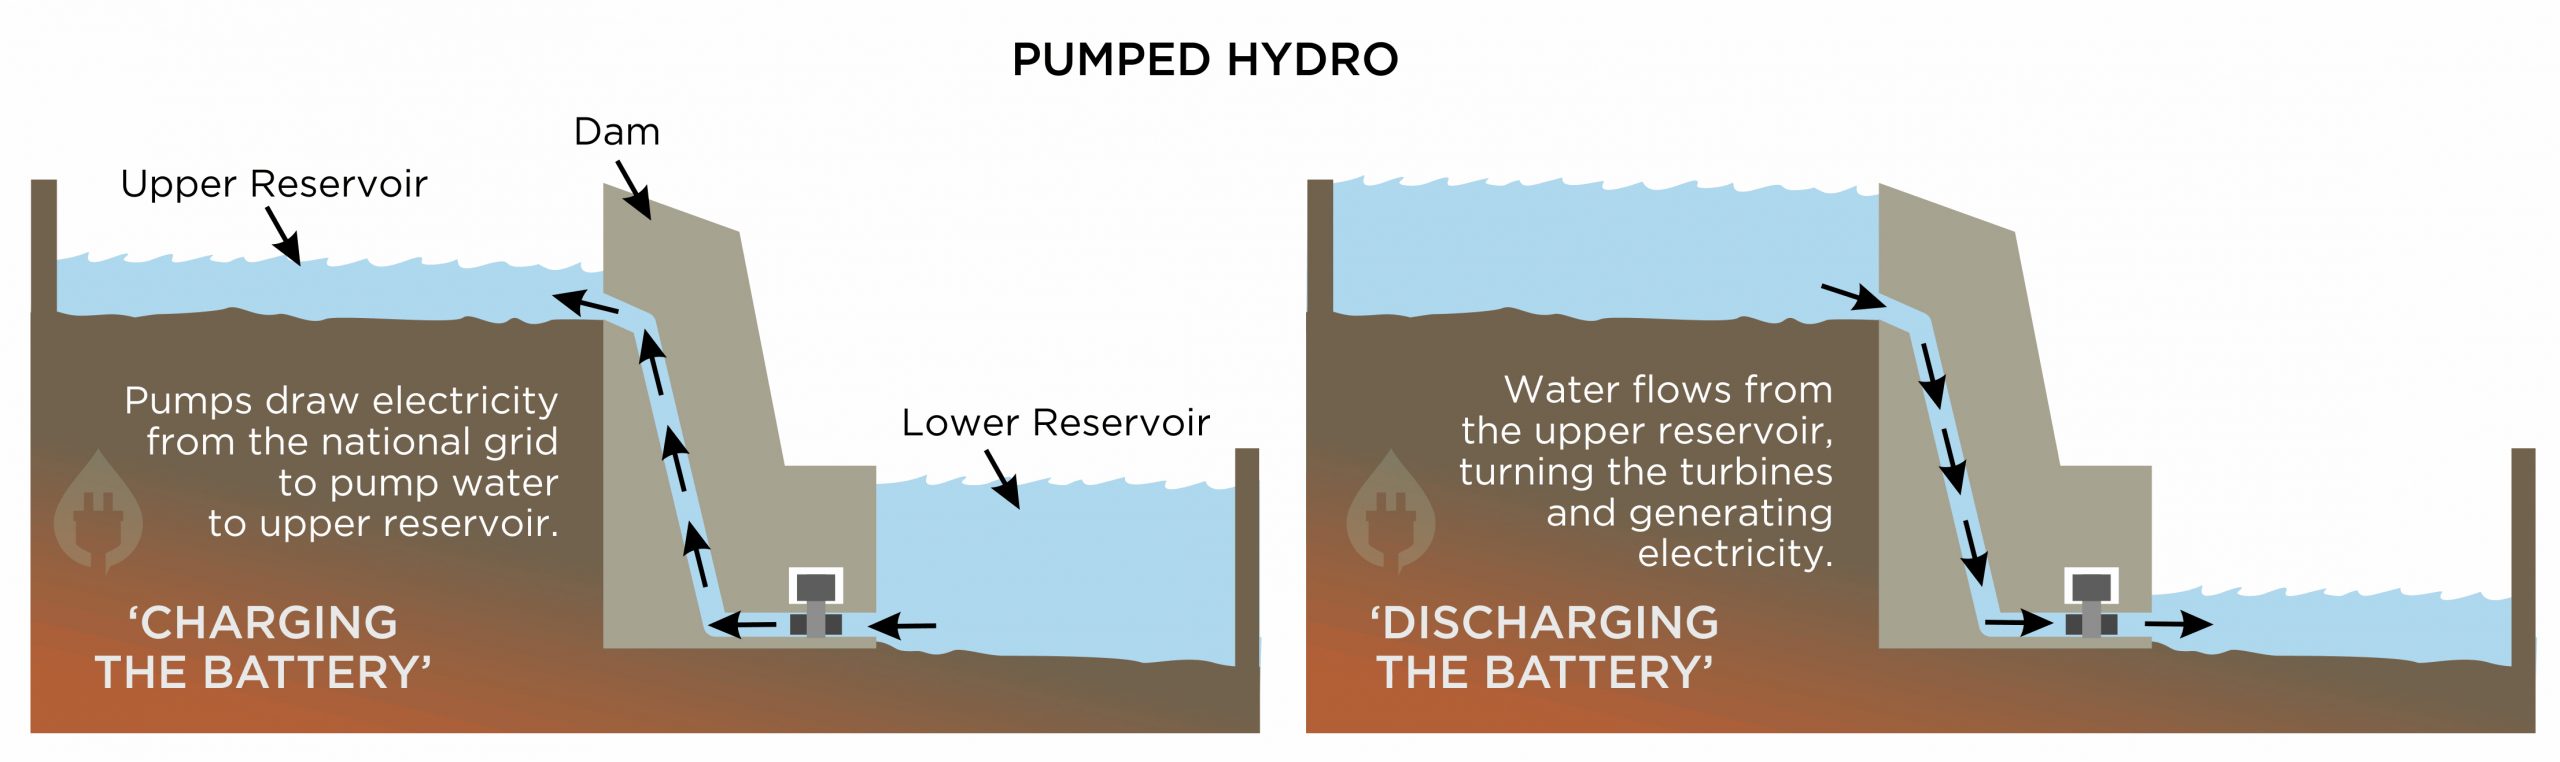 pumped hydro